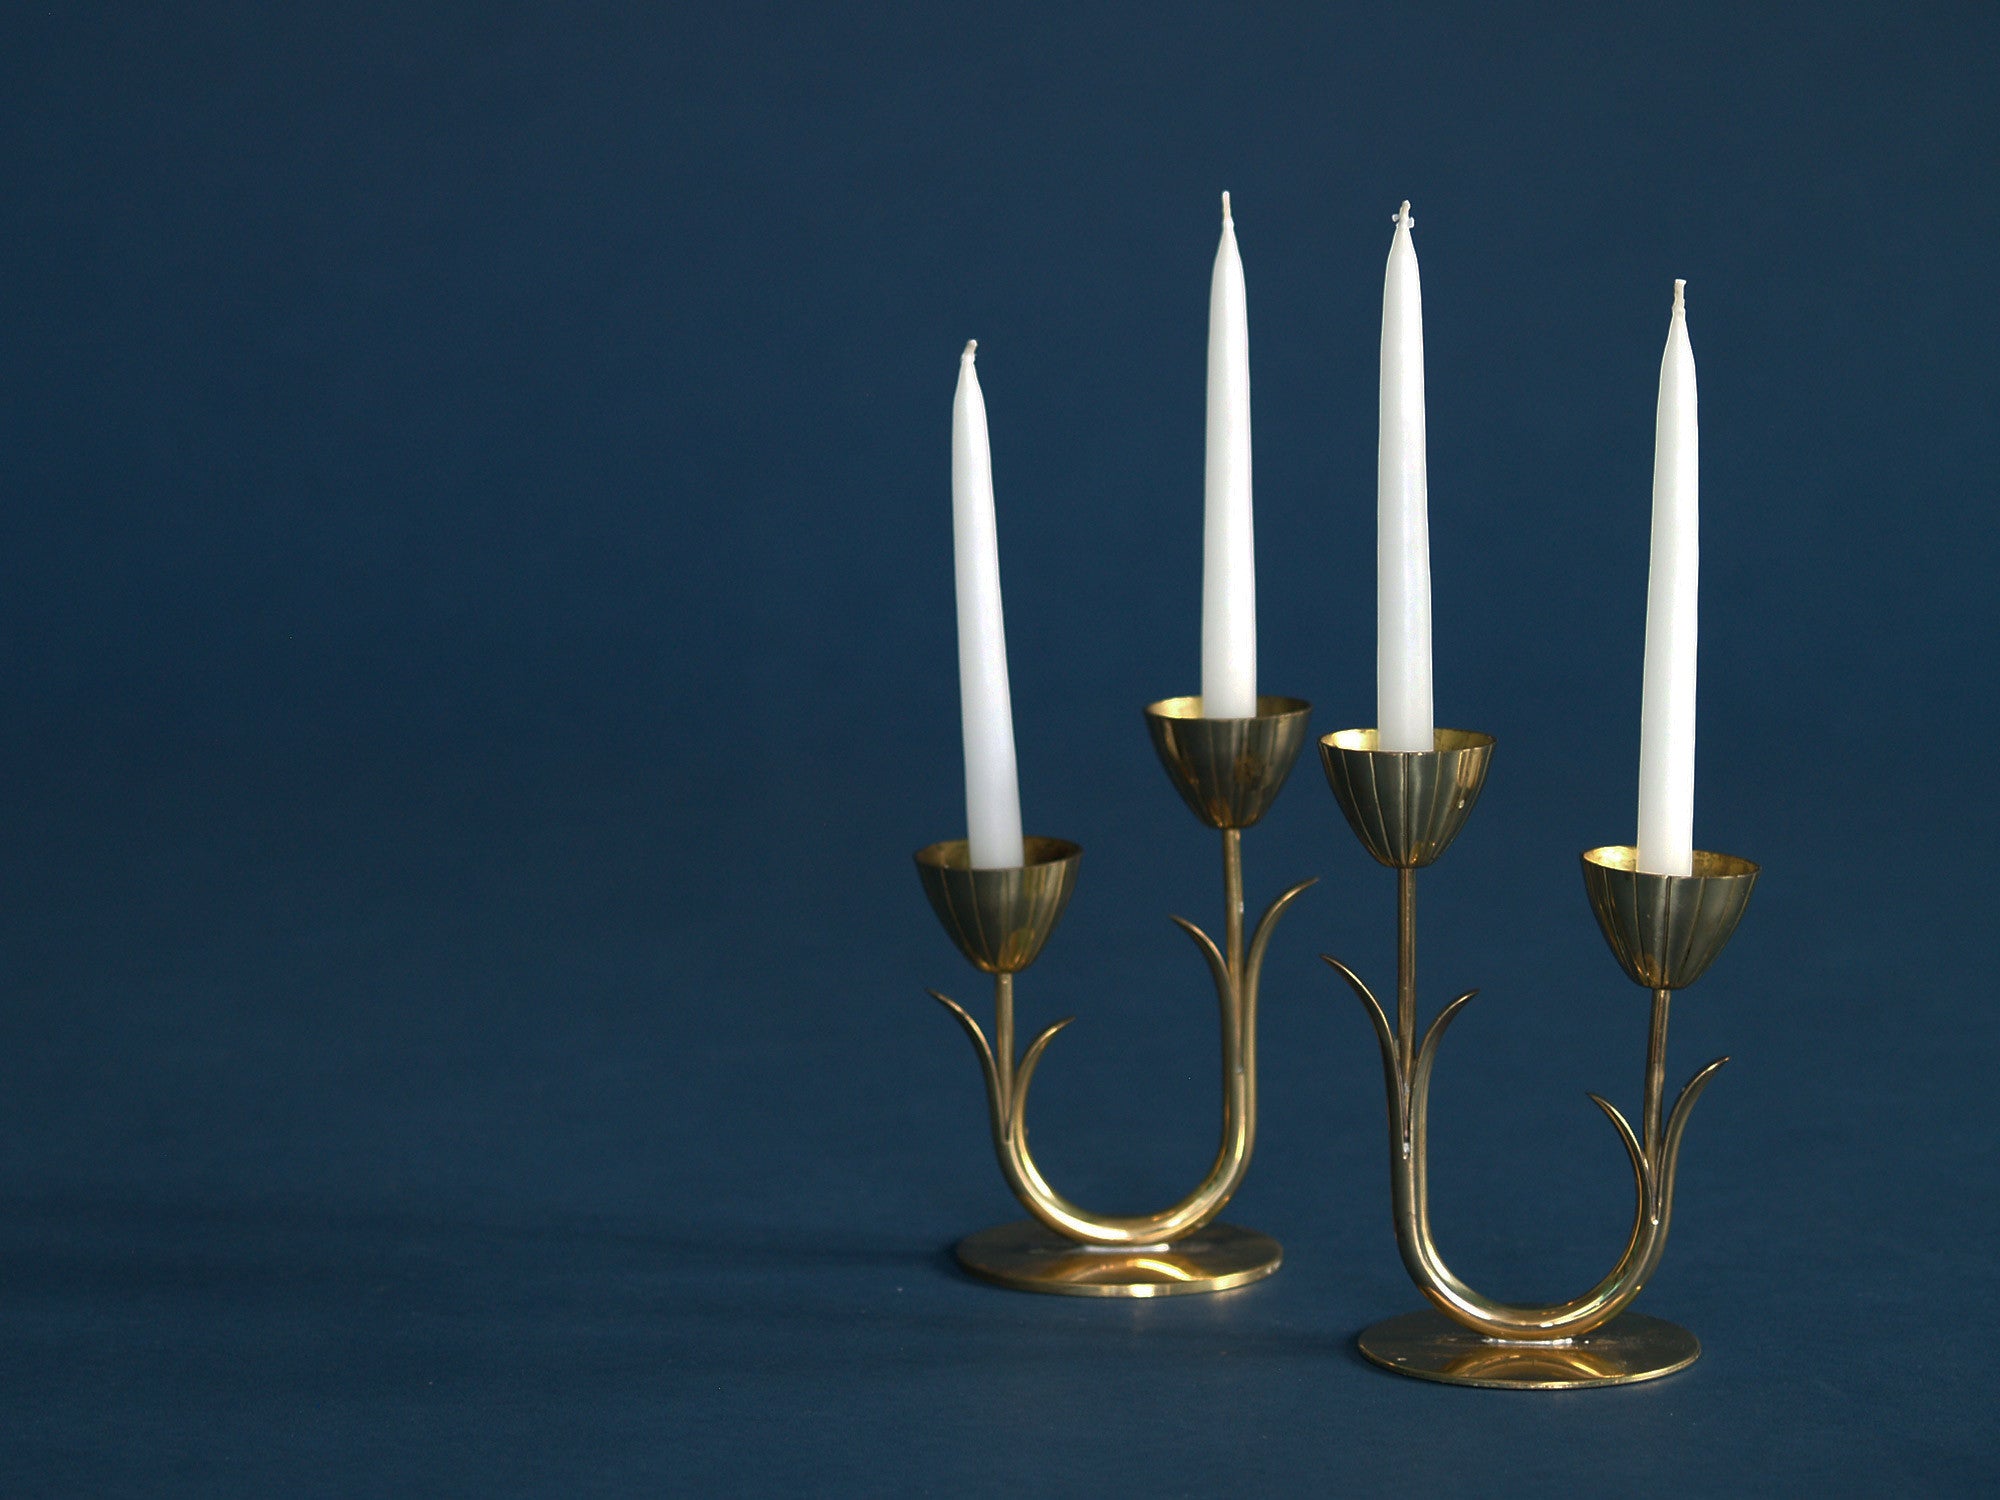 Paire de flambeaux de Gunnar Ander & Ystad Metall, Suède (années 1940)..Pair of candle holders by Gunnar Ander & Ystad Metall, Sweden (Circa 1940)